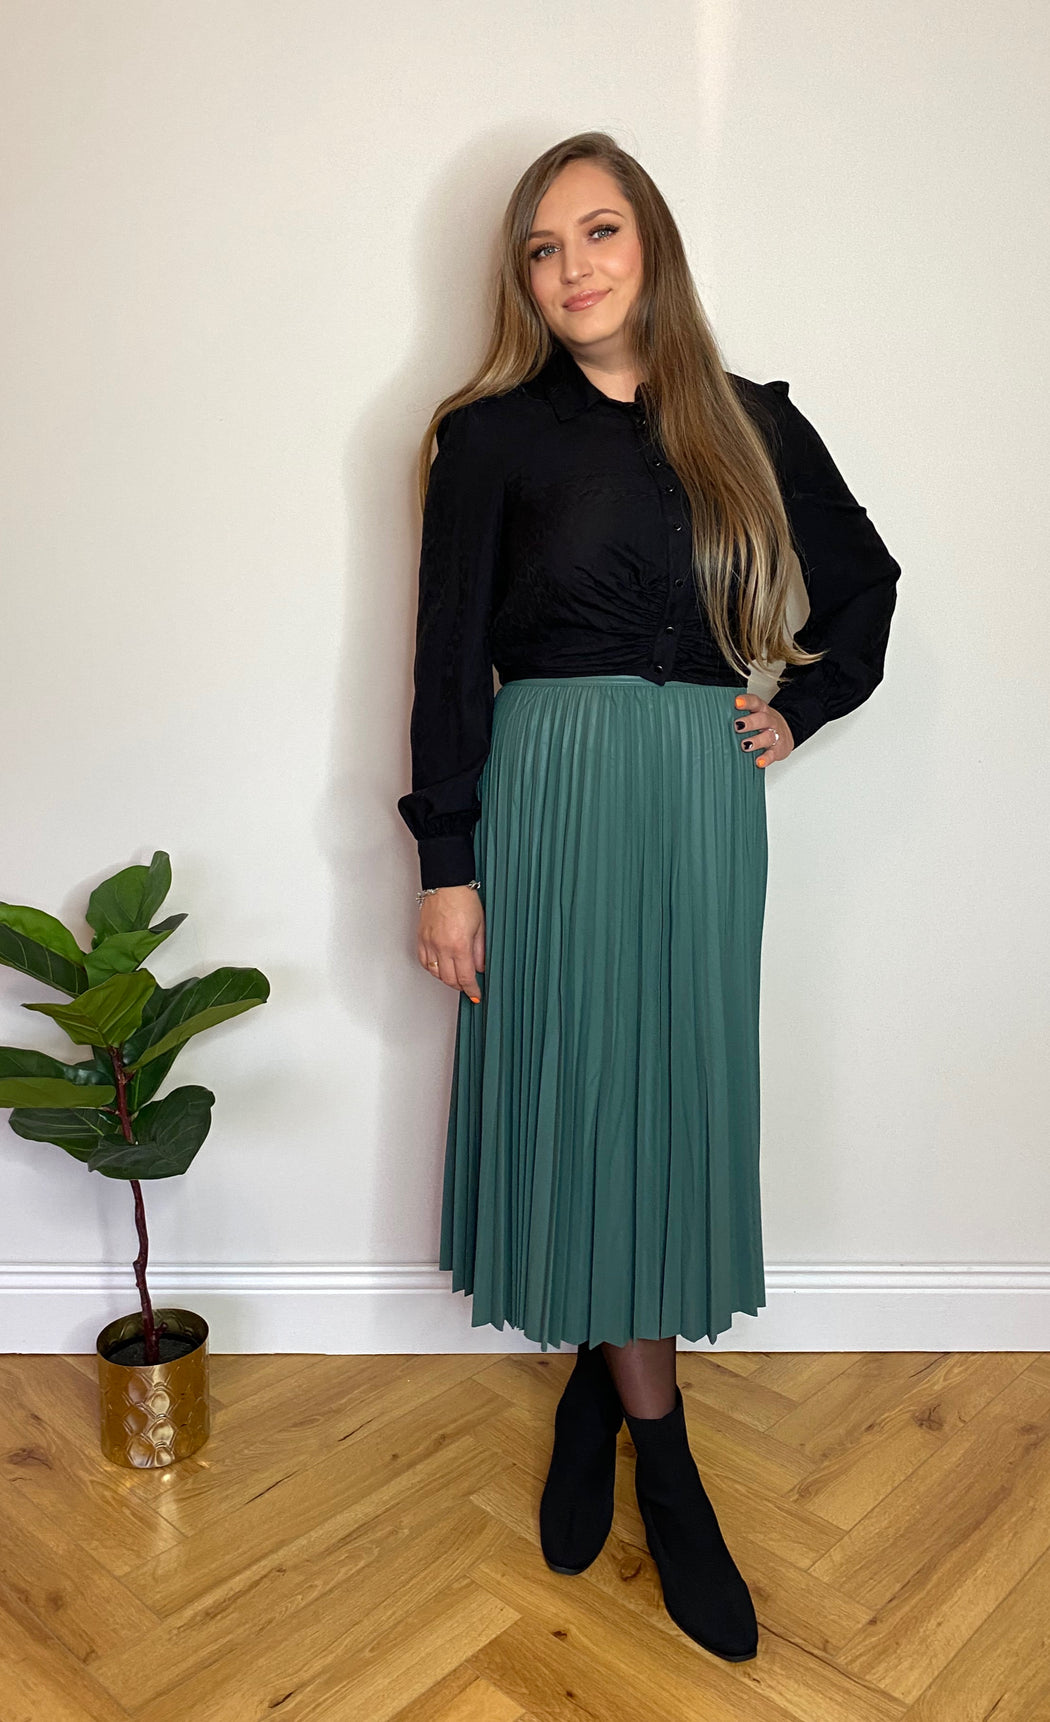 Kyoto pu green leather skirt